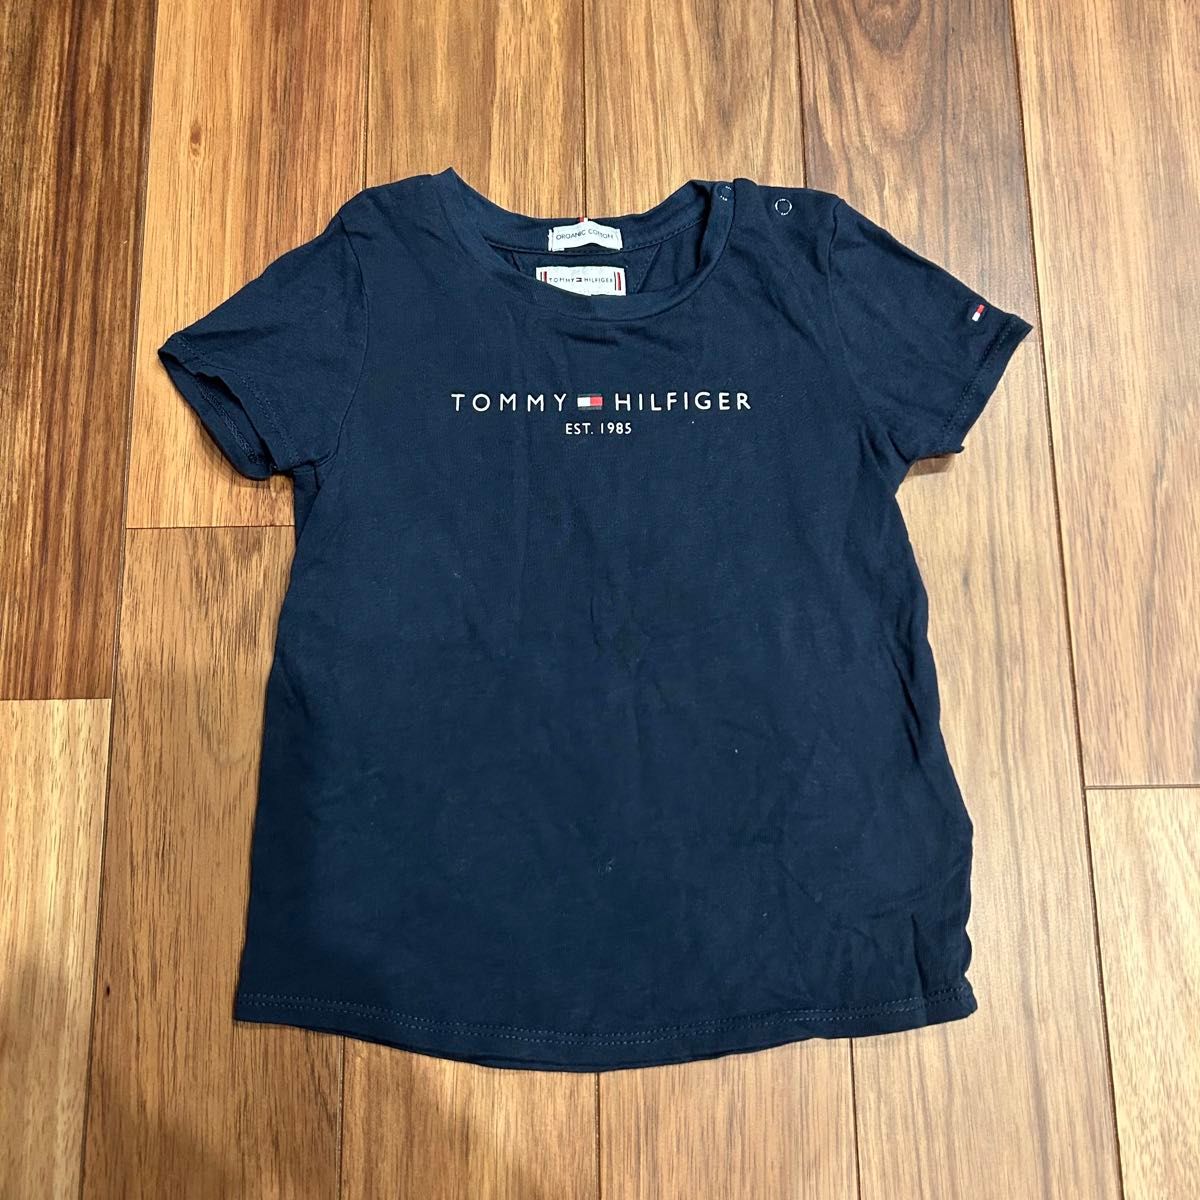 TOMMY HILFIGER トミーヒルフィガー 半袖 Tシャツ 子ども服 92cm ネイビー 極美品